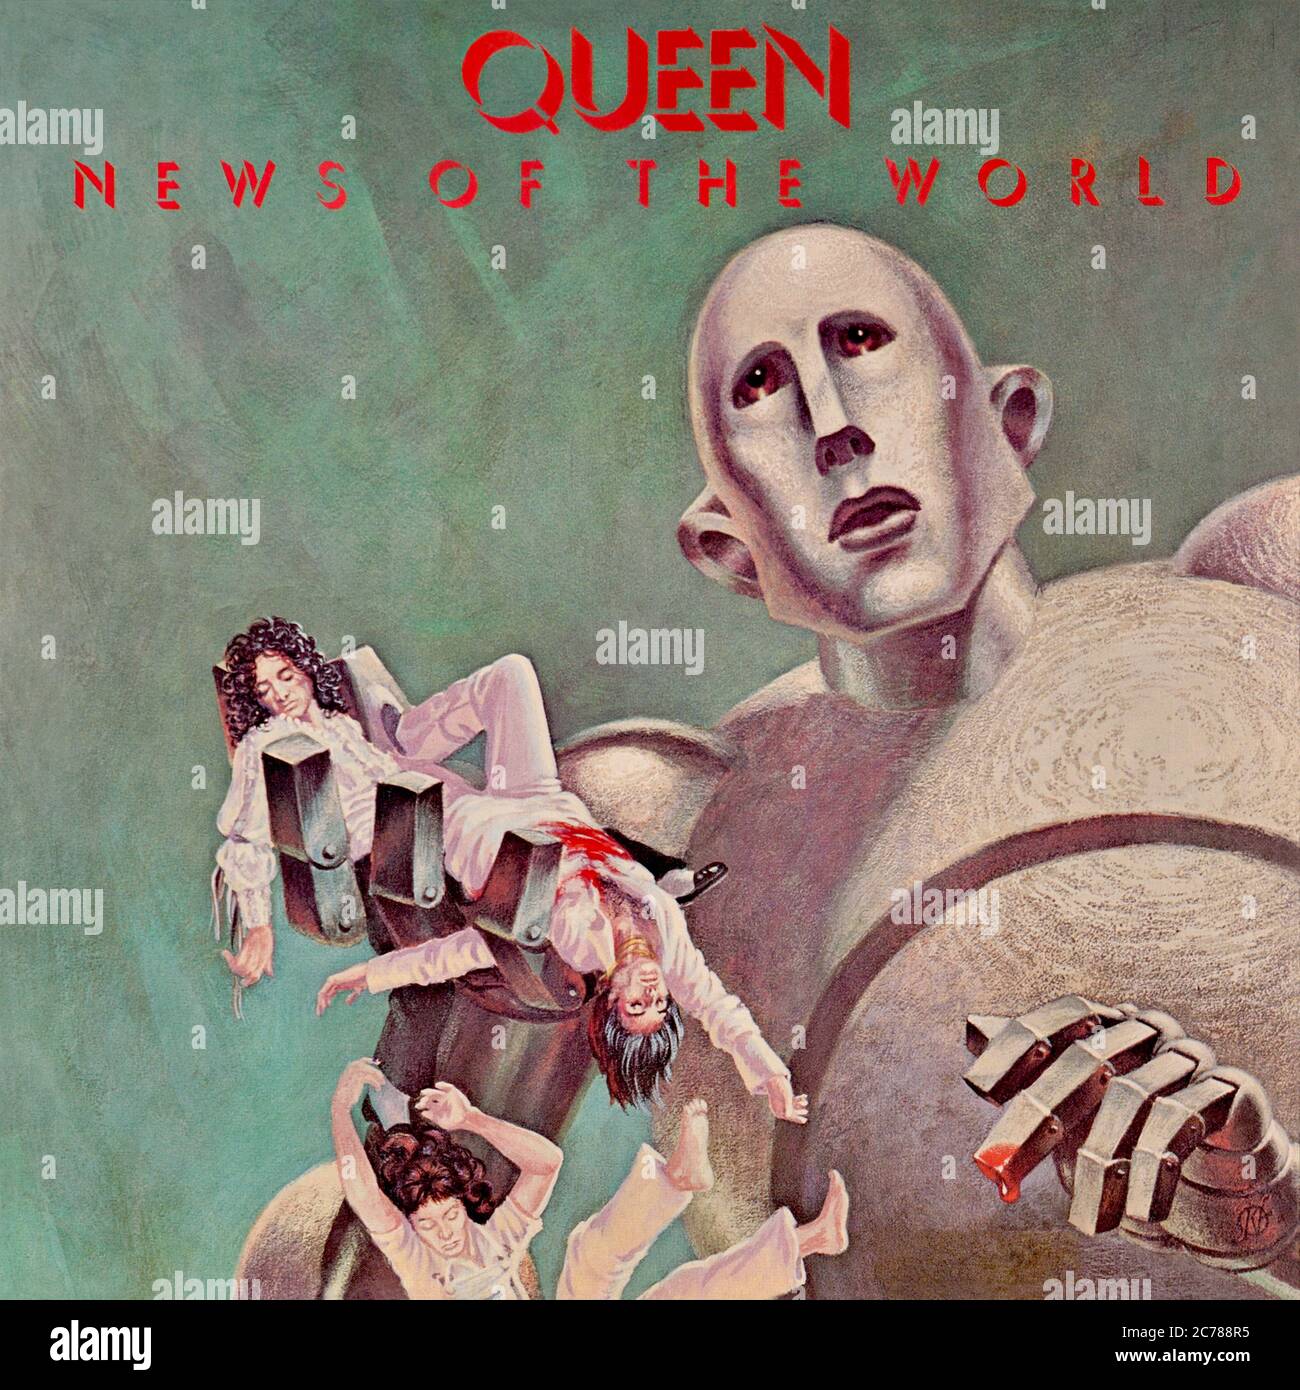 Queen - original vinyl album cover - News Of The World - 1977 Stock Photo